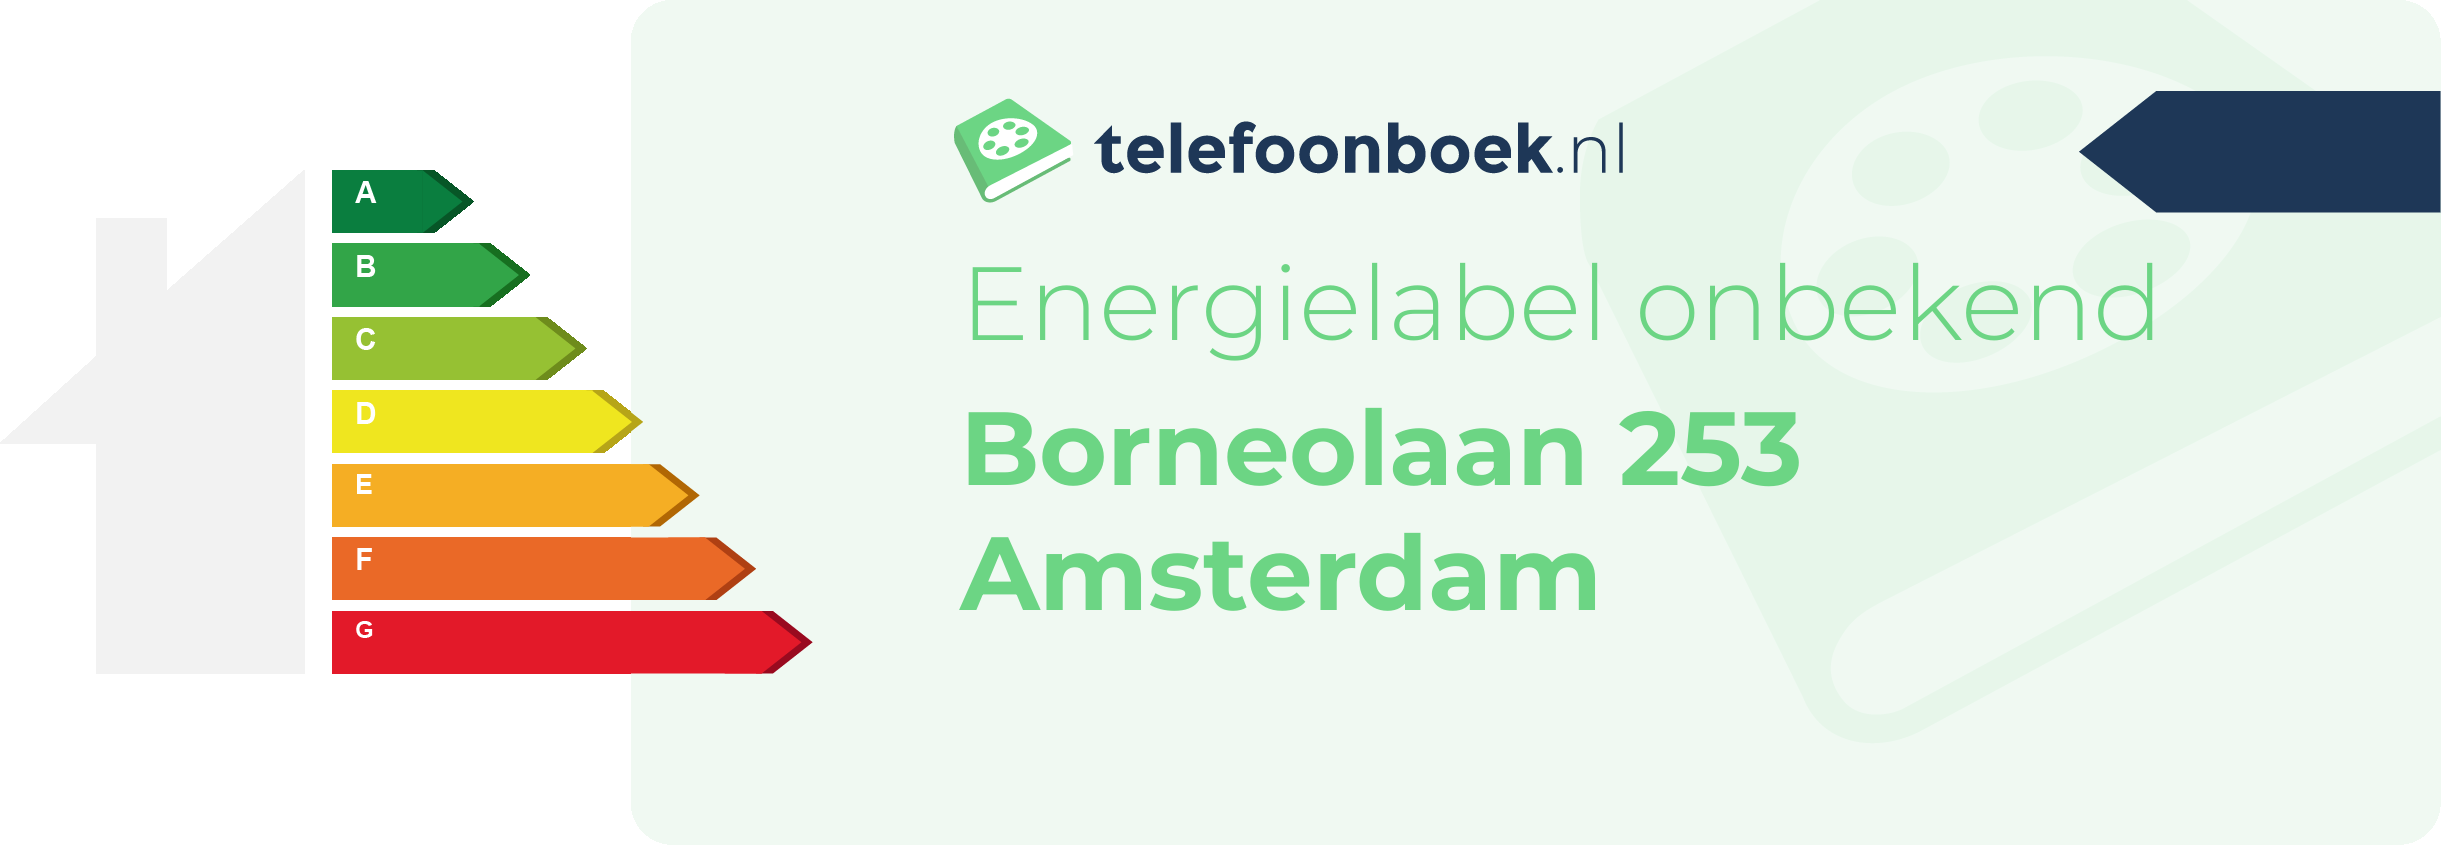 Energielabel Borneolaan 253 Amsterdam